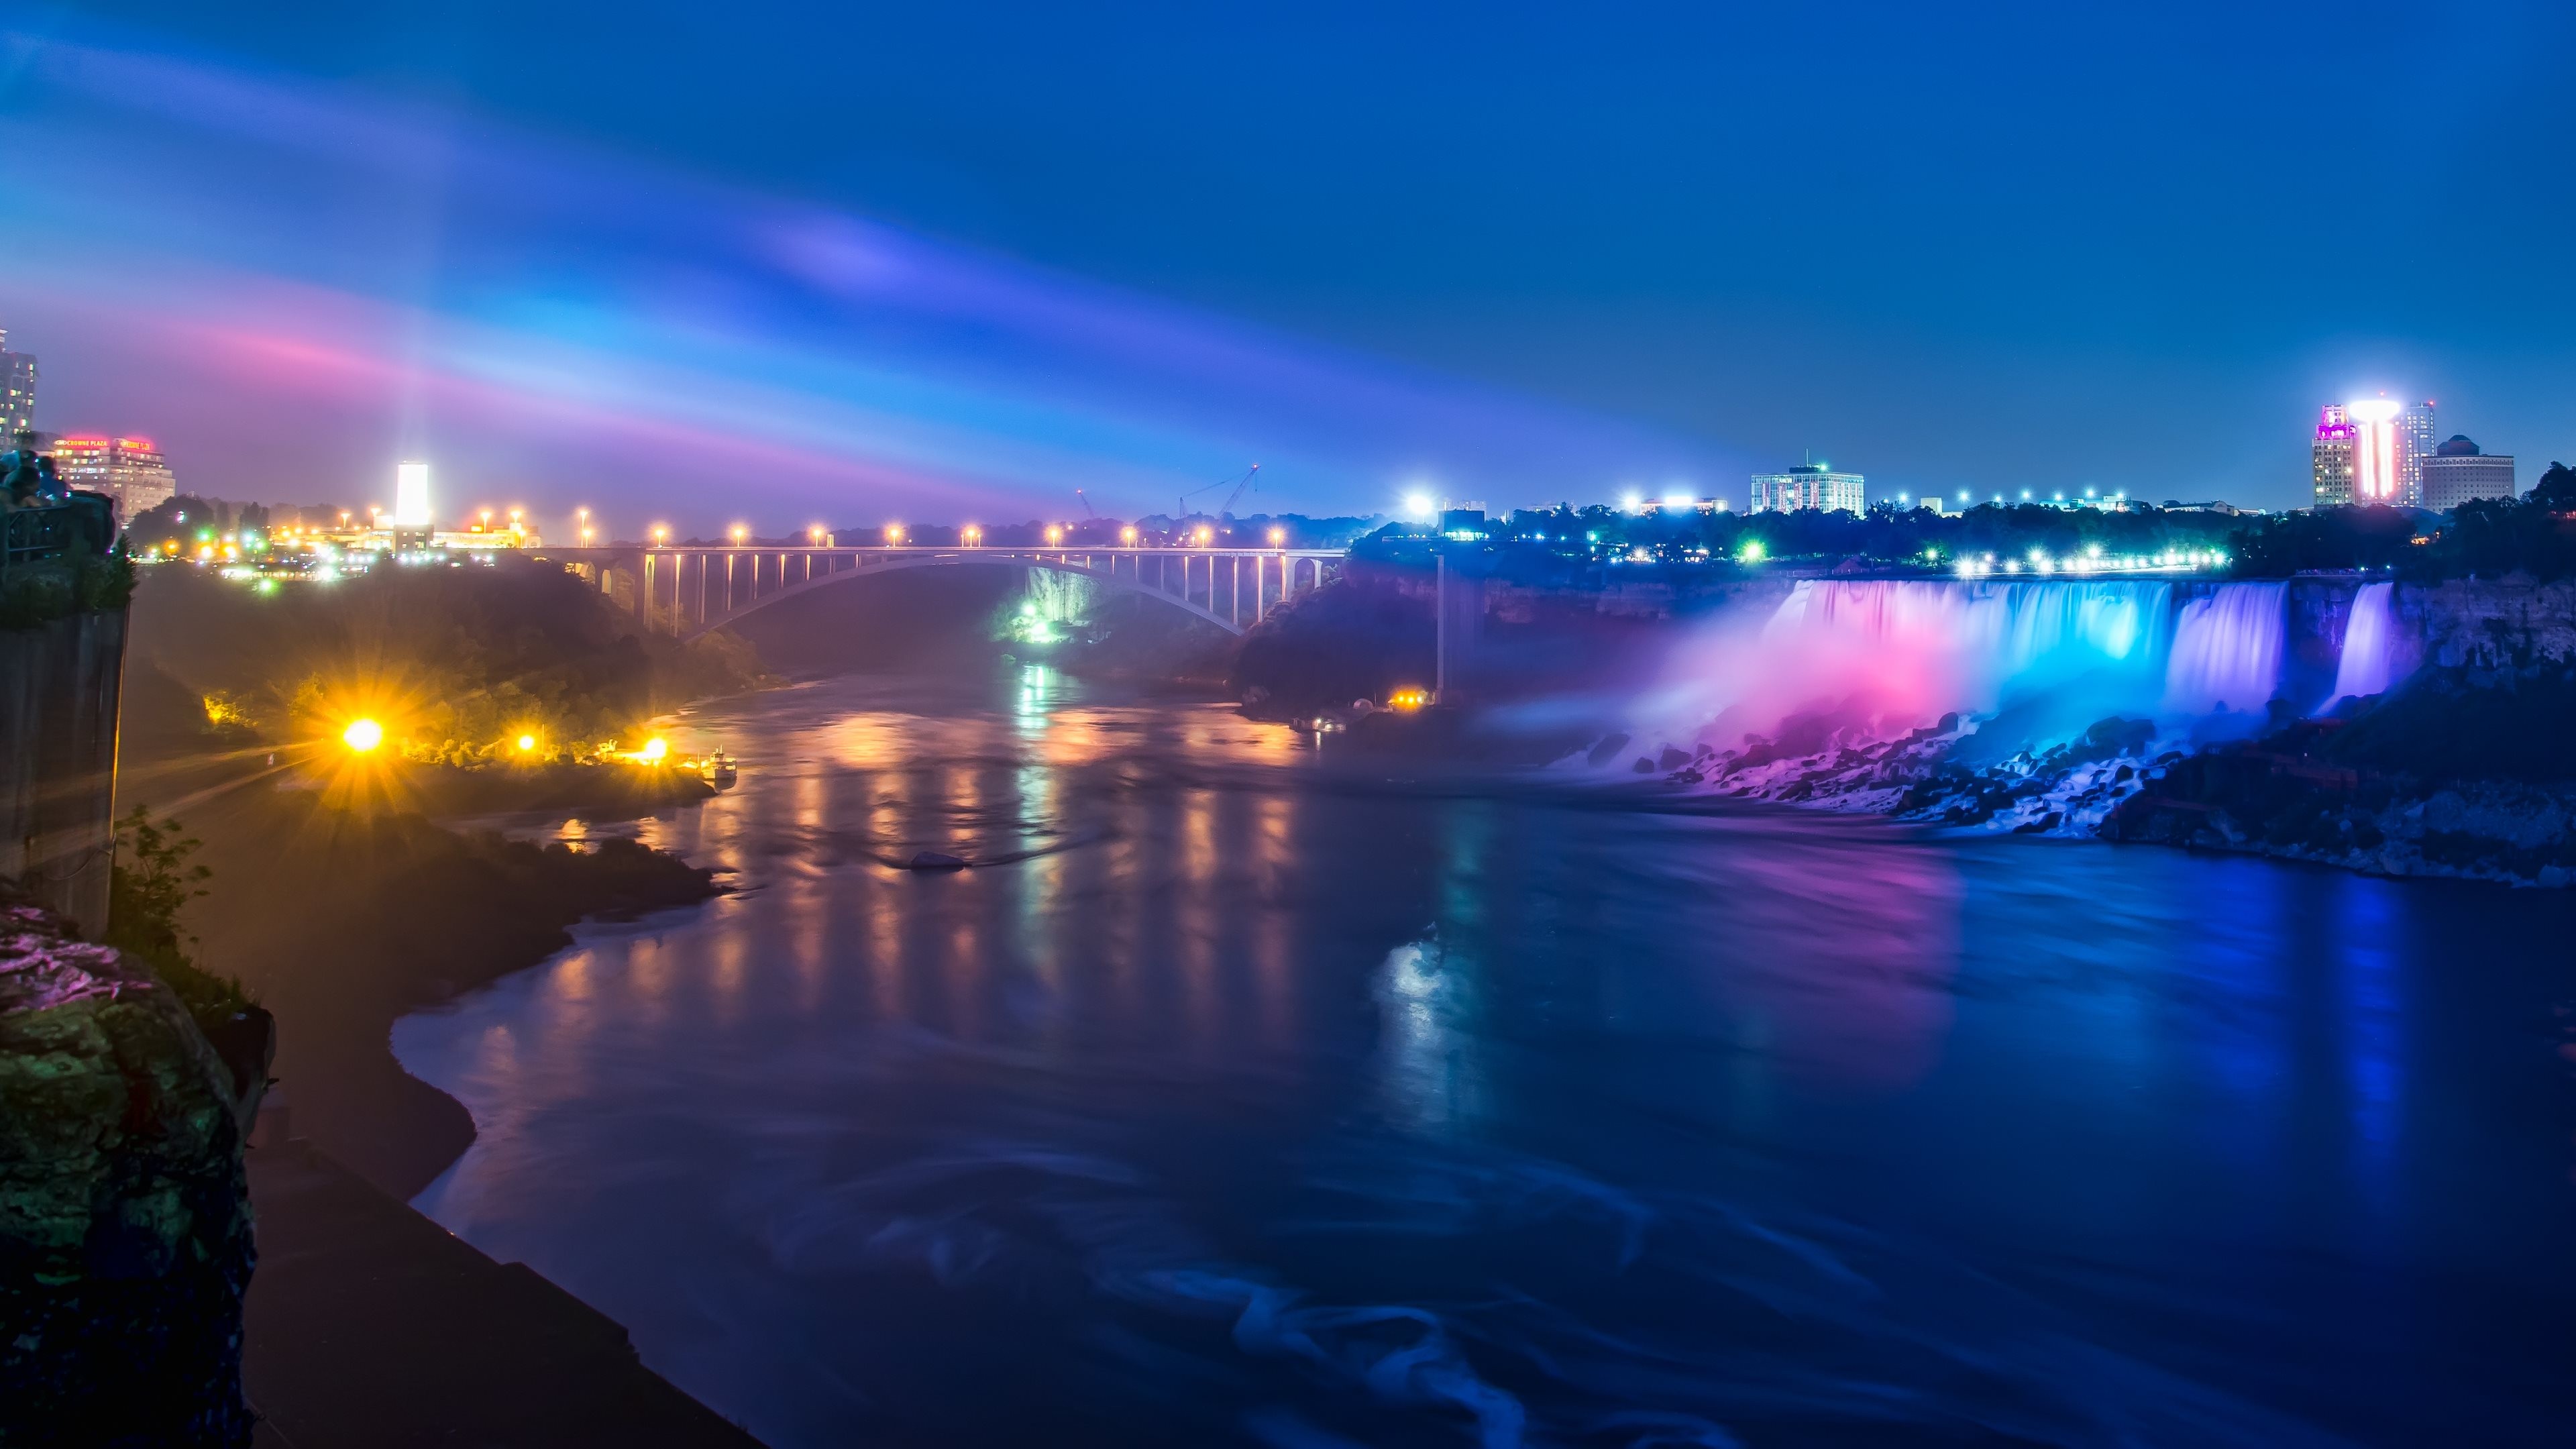 General 3840x2160 Niagara Falls waterfall river lights landscape glowing night bridge neon cyan pink blue city lights motion blur colorful low light